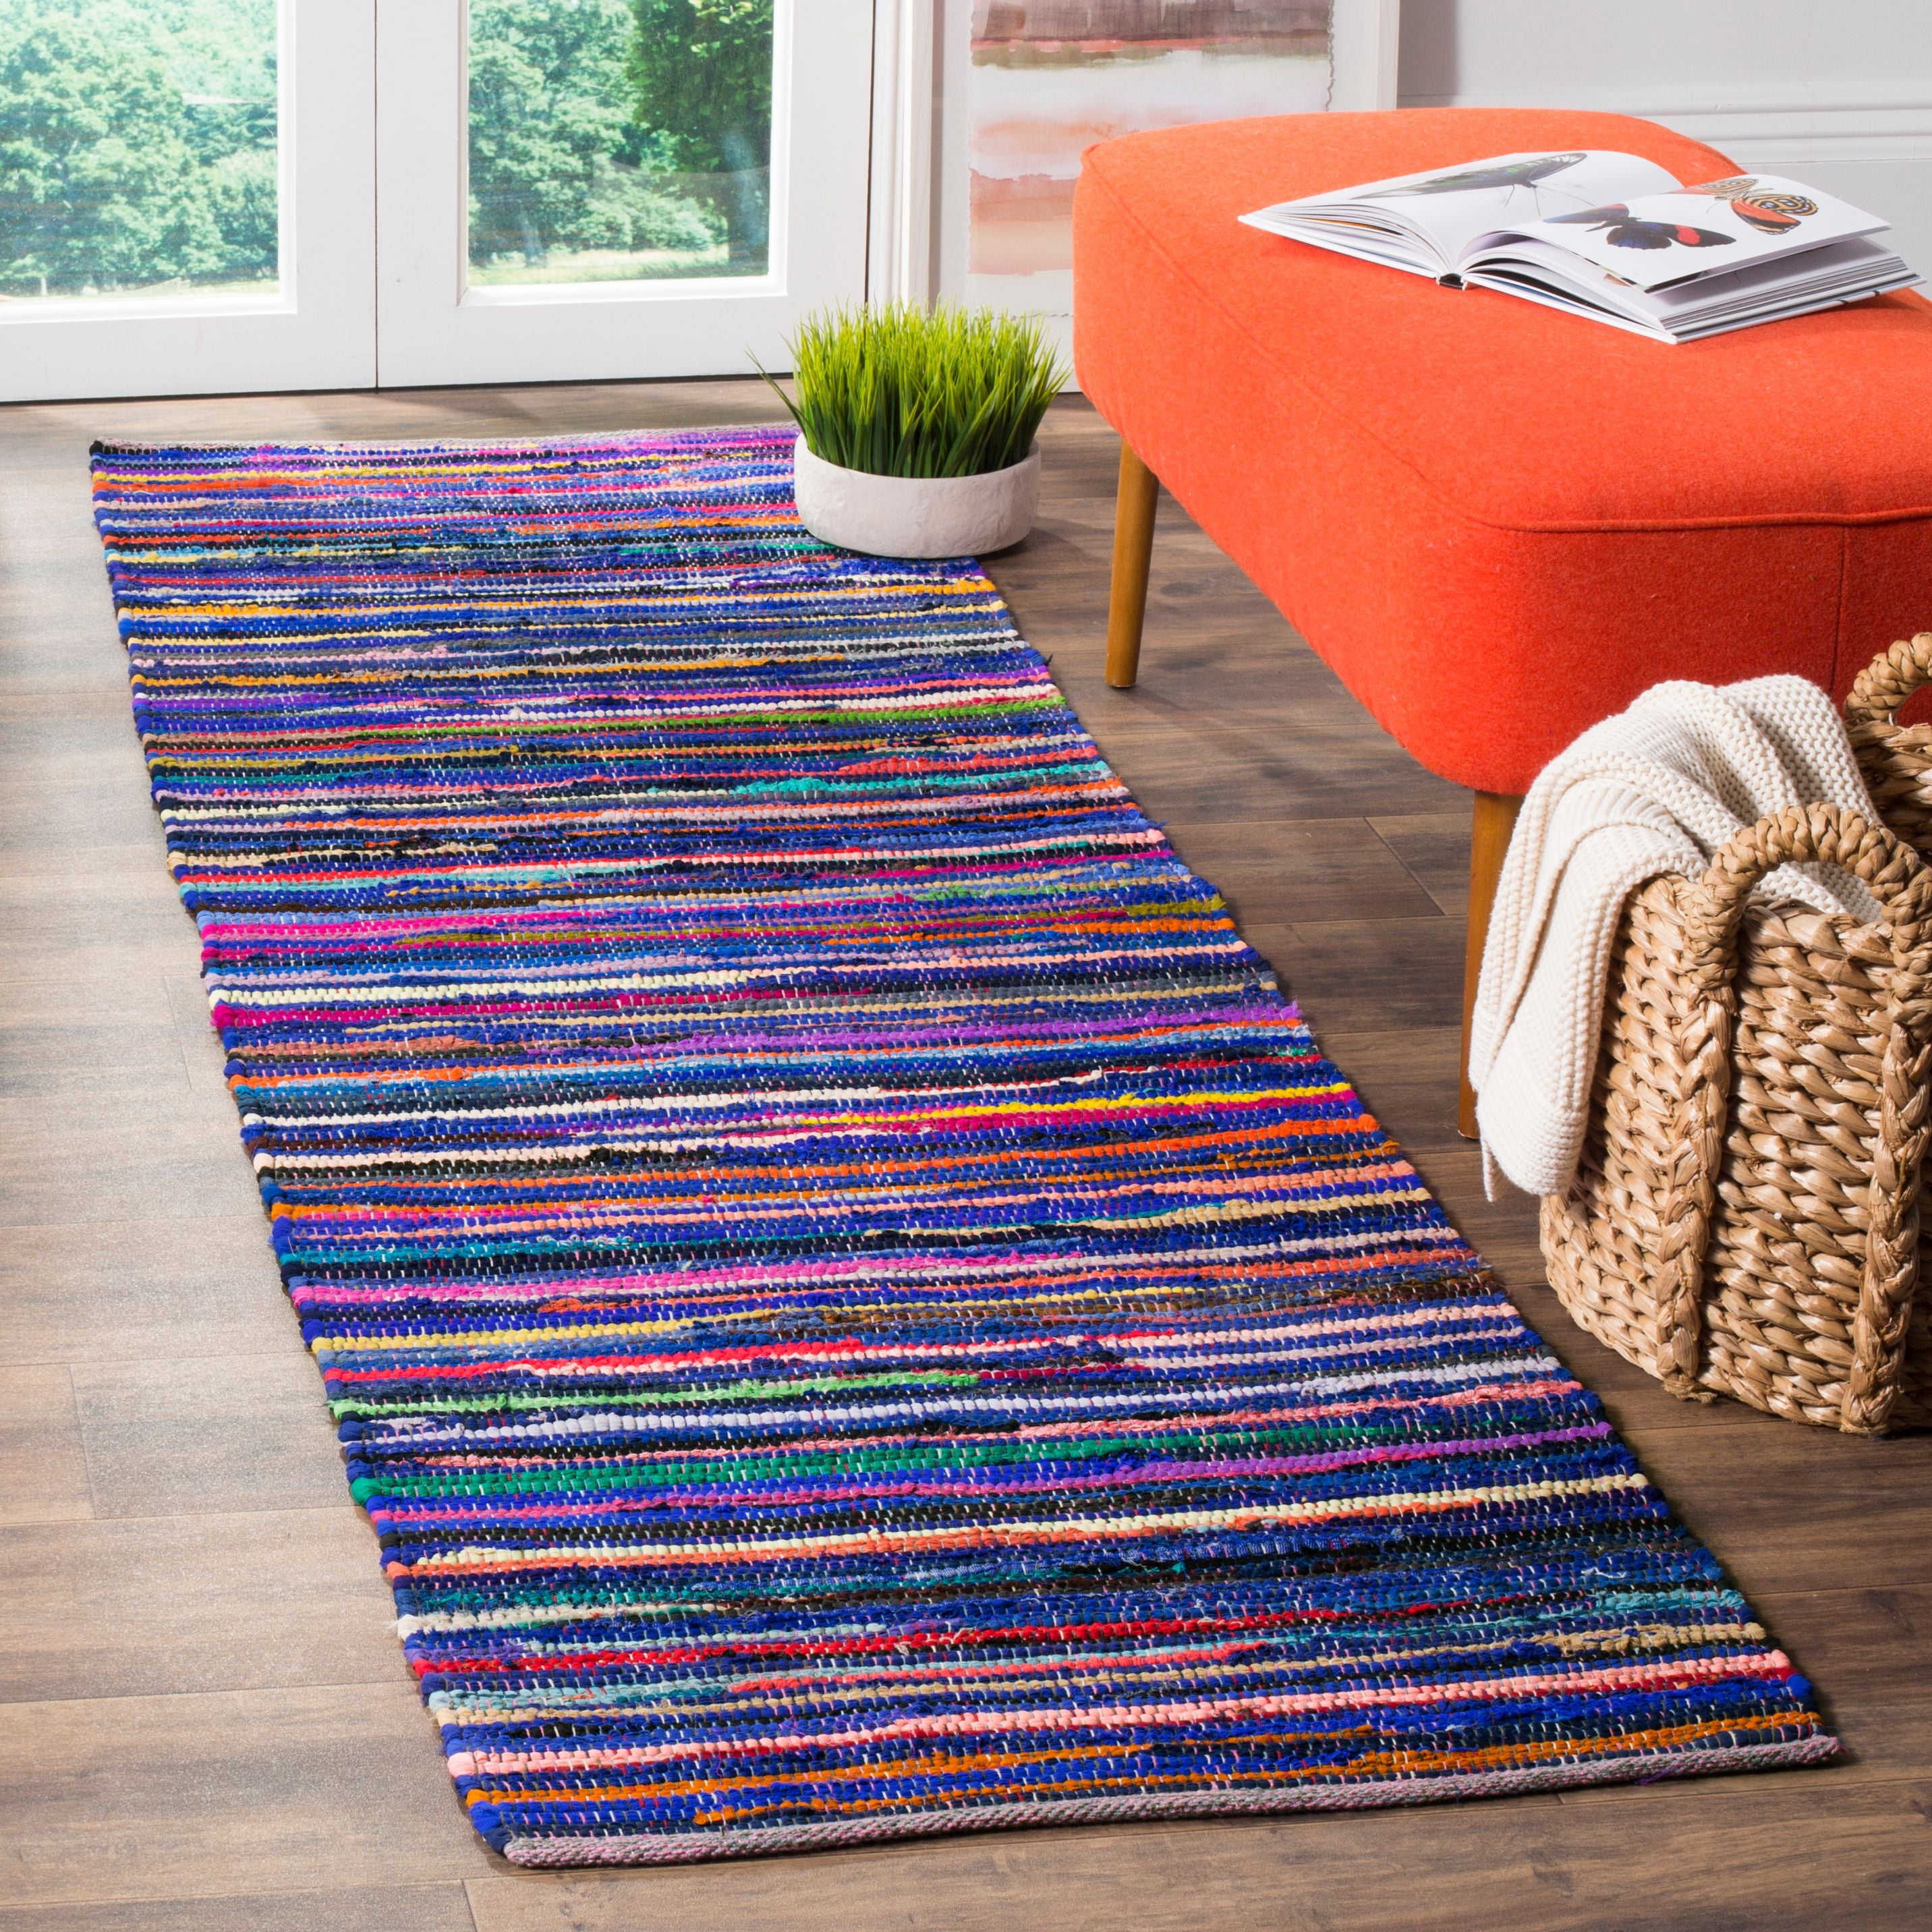 Details about   2x6' Vintage Runner Wool Jute Floor Carpet Handwoven Dhurri Indian Floor Runner 